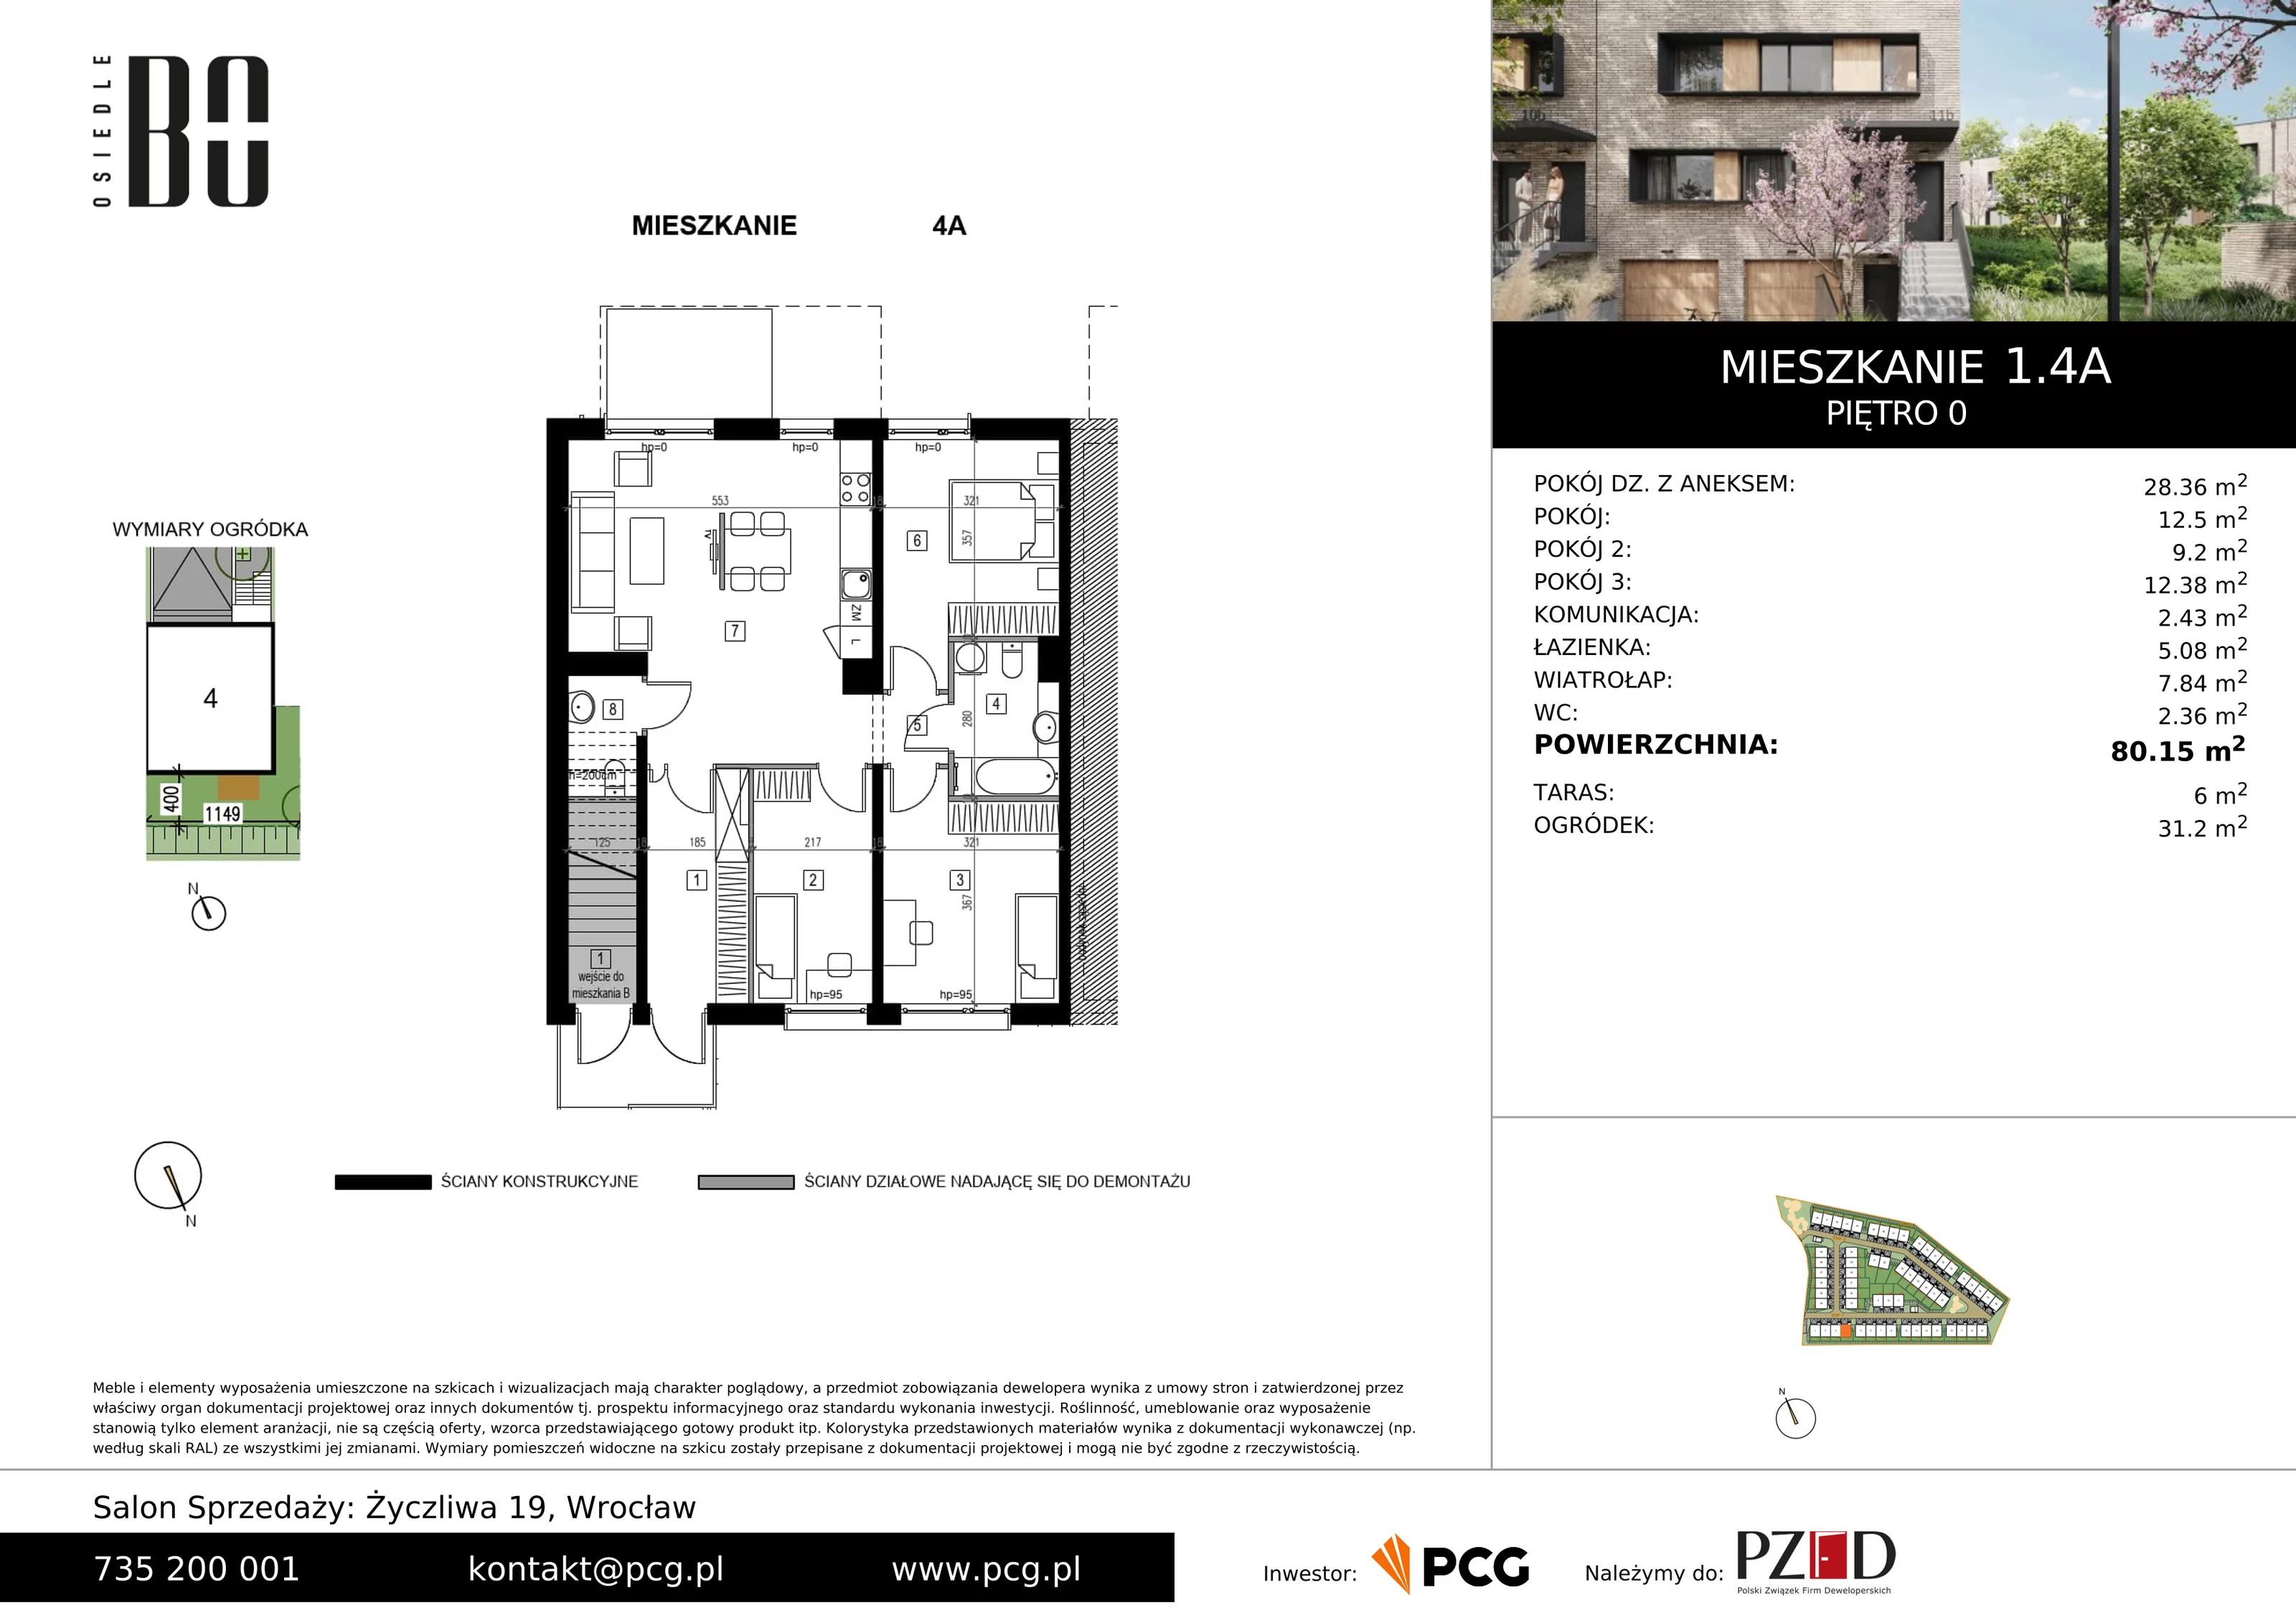 Apartament 80,15 m², parter, oferta nr 1.4A, Osiedle BO, Wrocław, Kowale, ul. Bociana